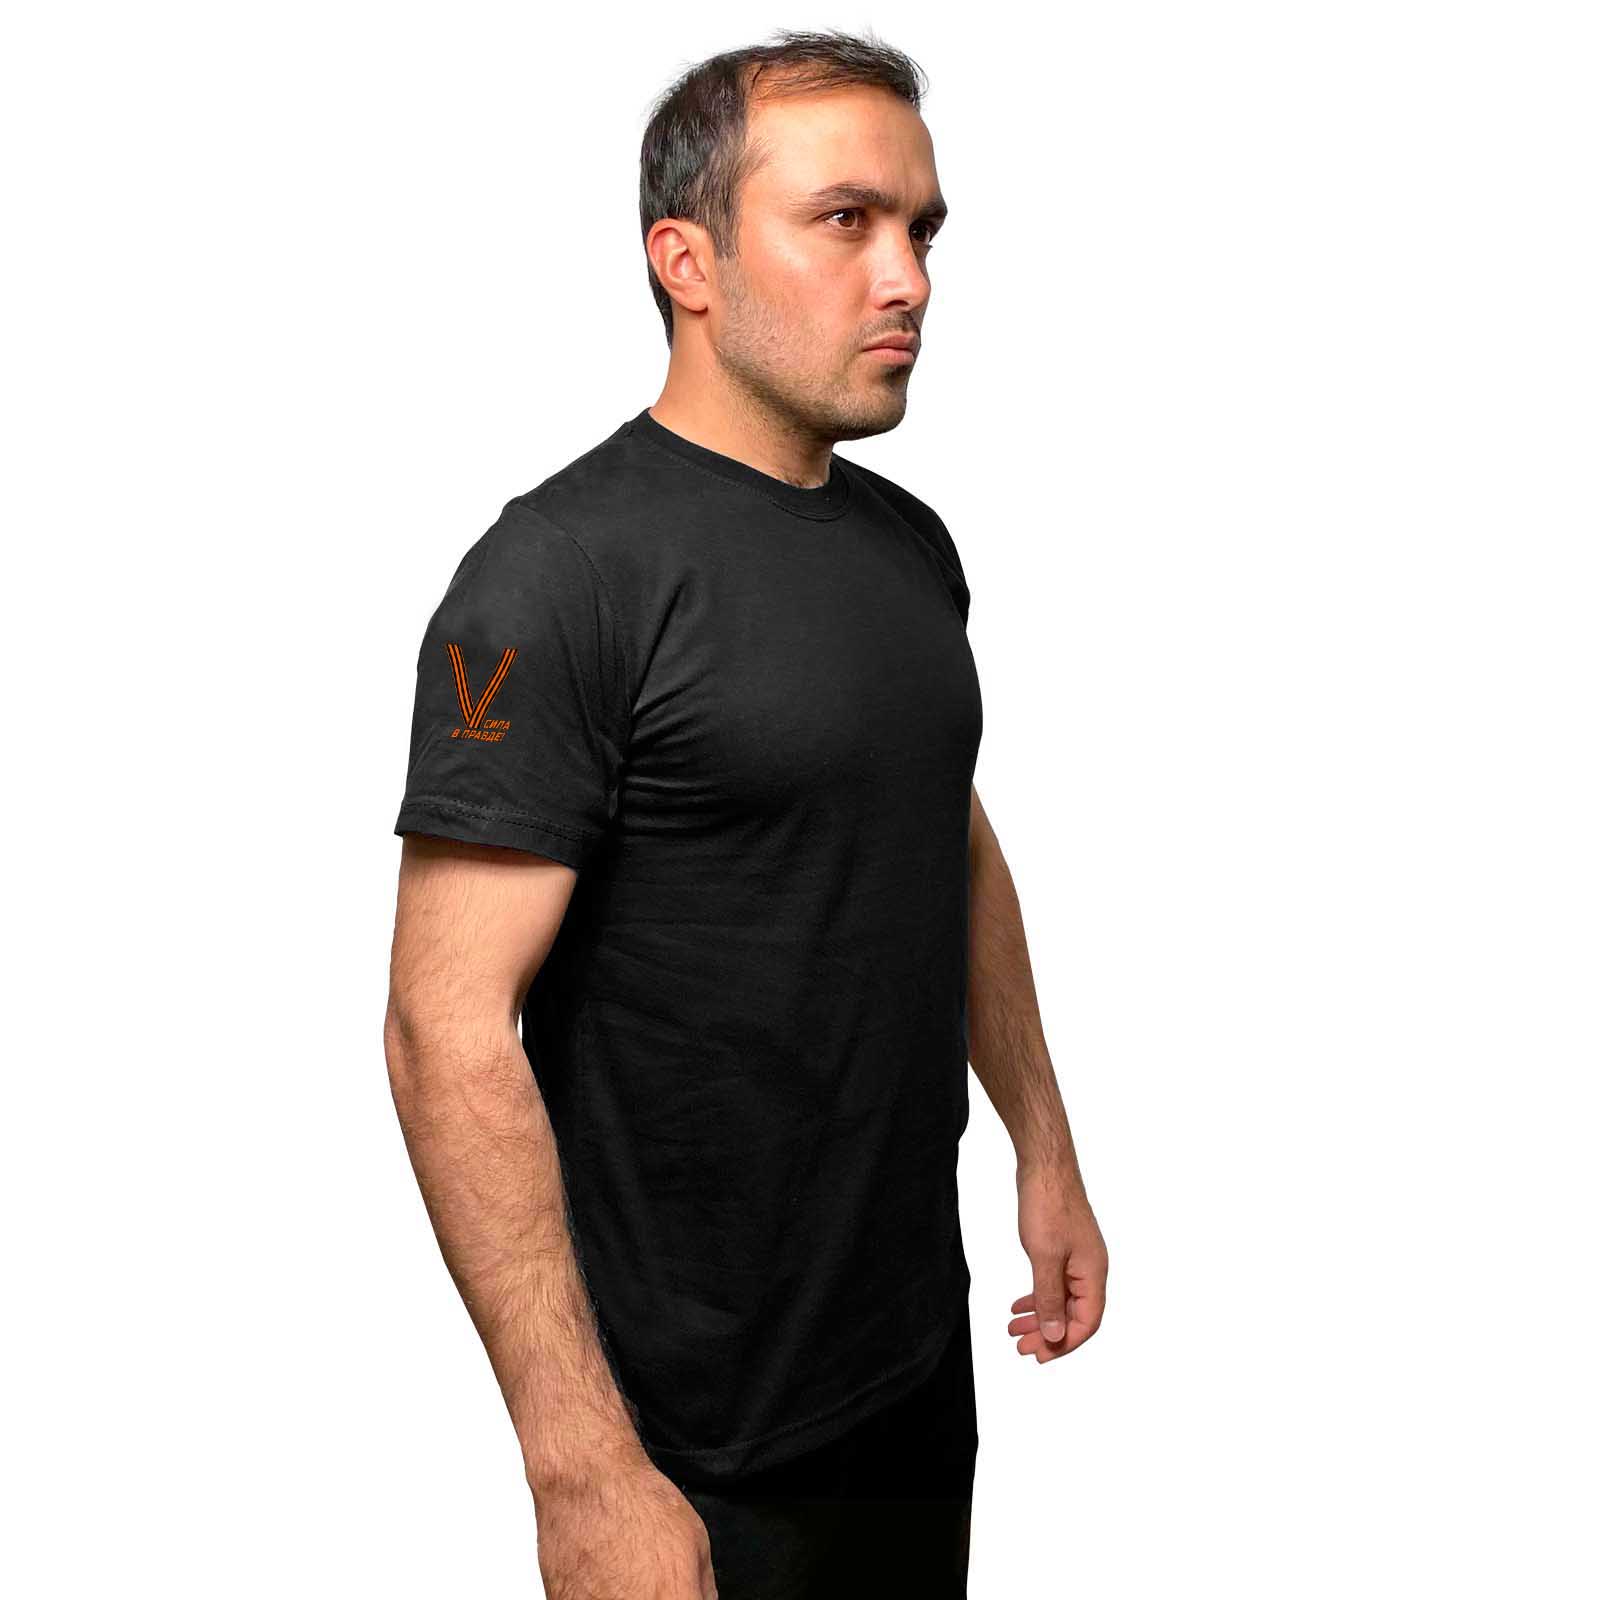 Чёрная футболка с гвардейским термотрансфером V на рукаве